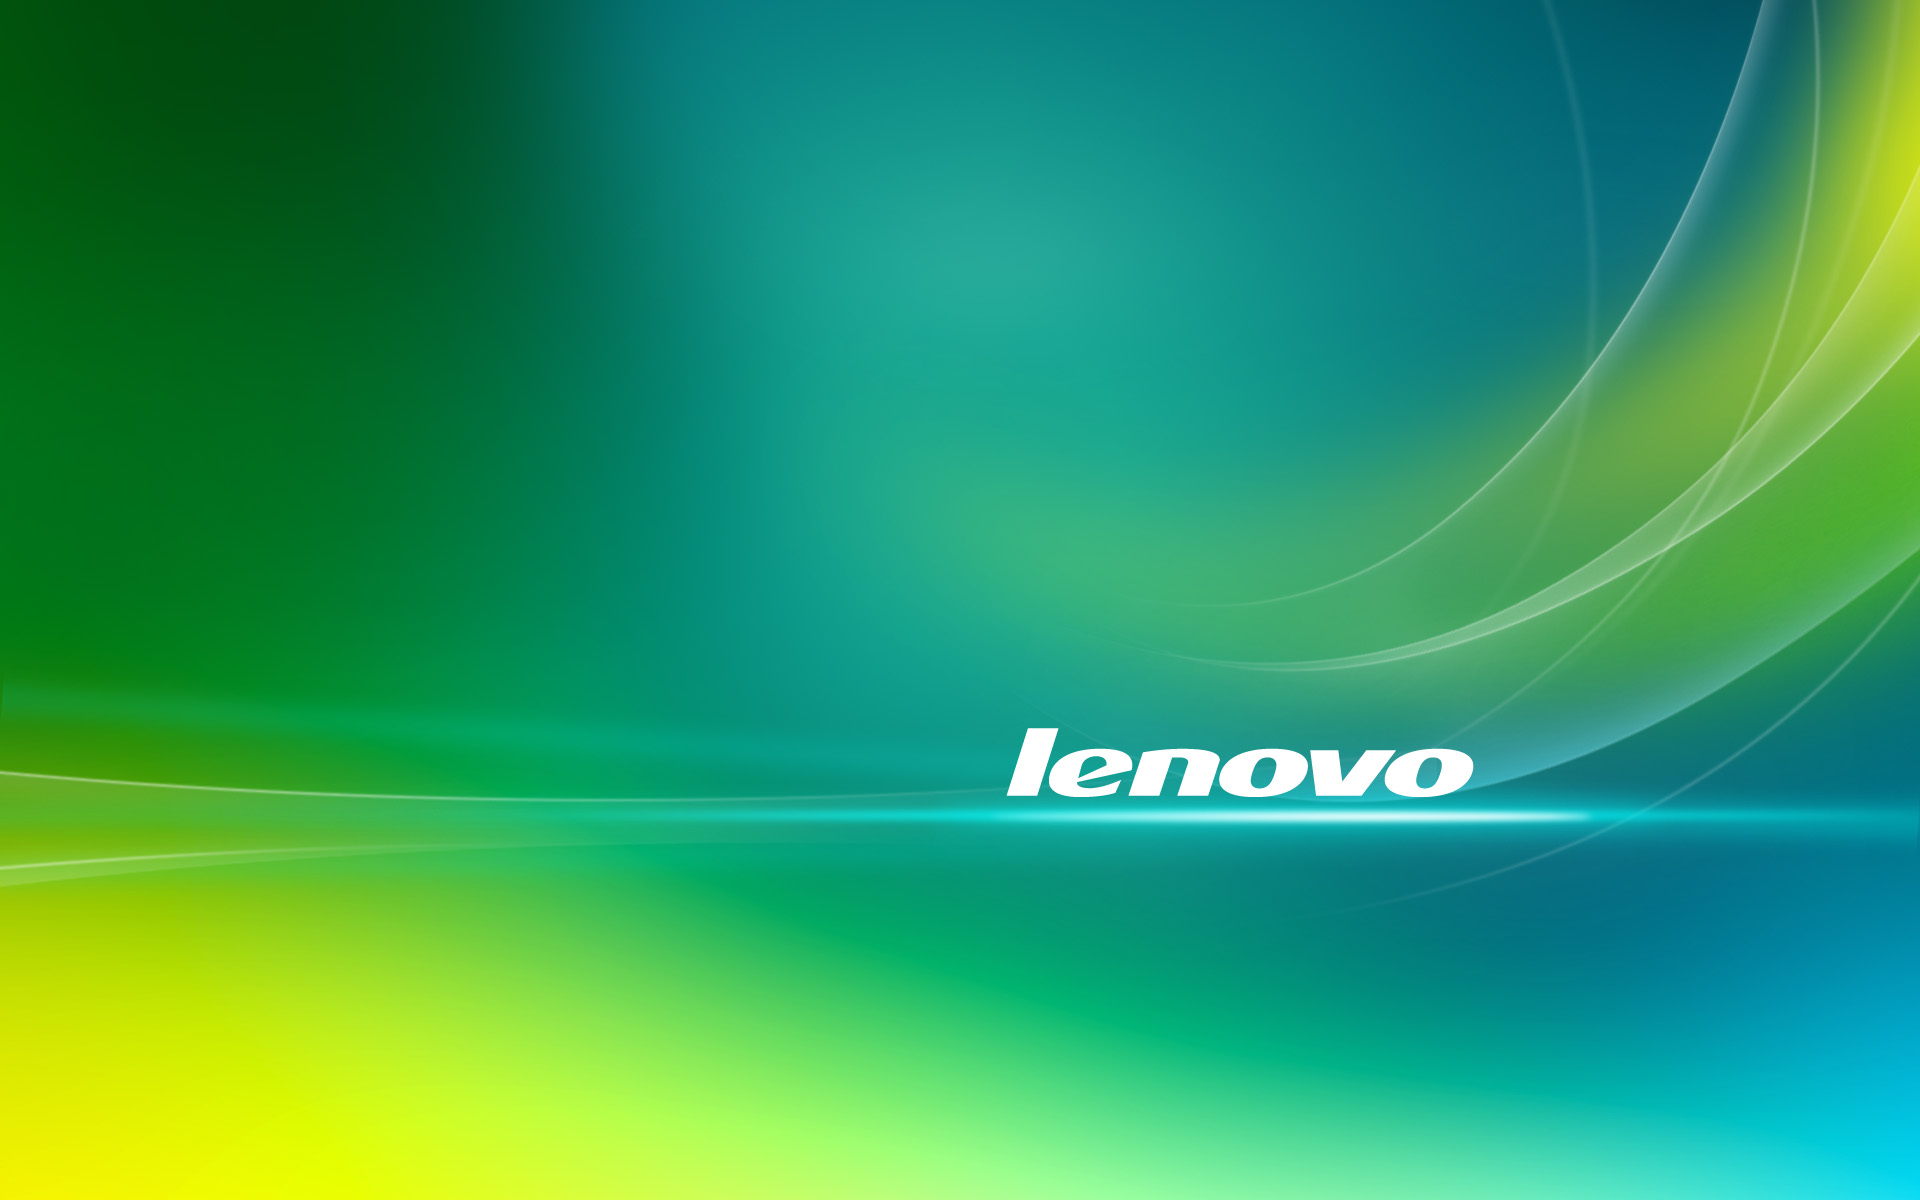 Lenovo Full HD Desktop Wallpaper Wallinda